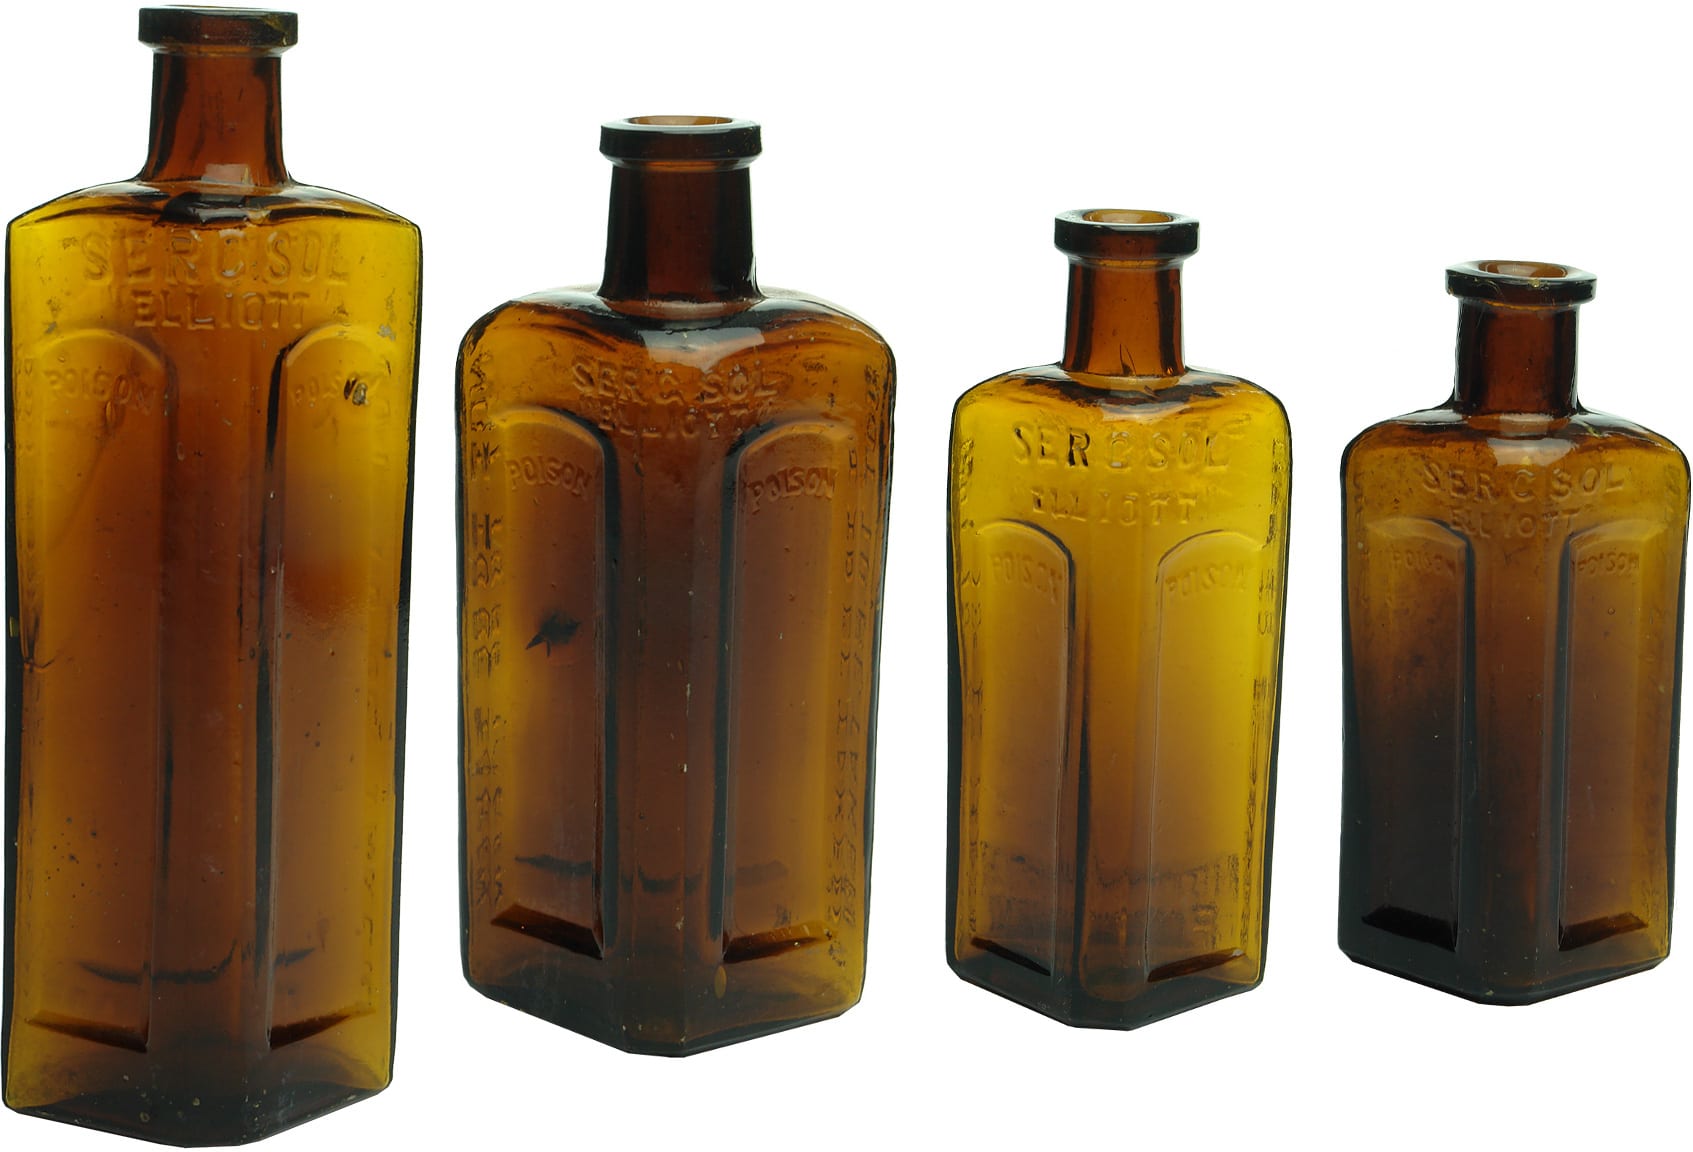 Elliott Sercsol Antique Poison Bottles